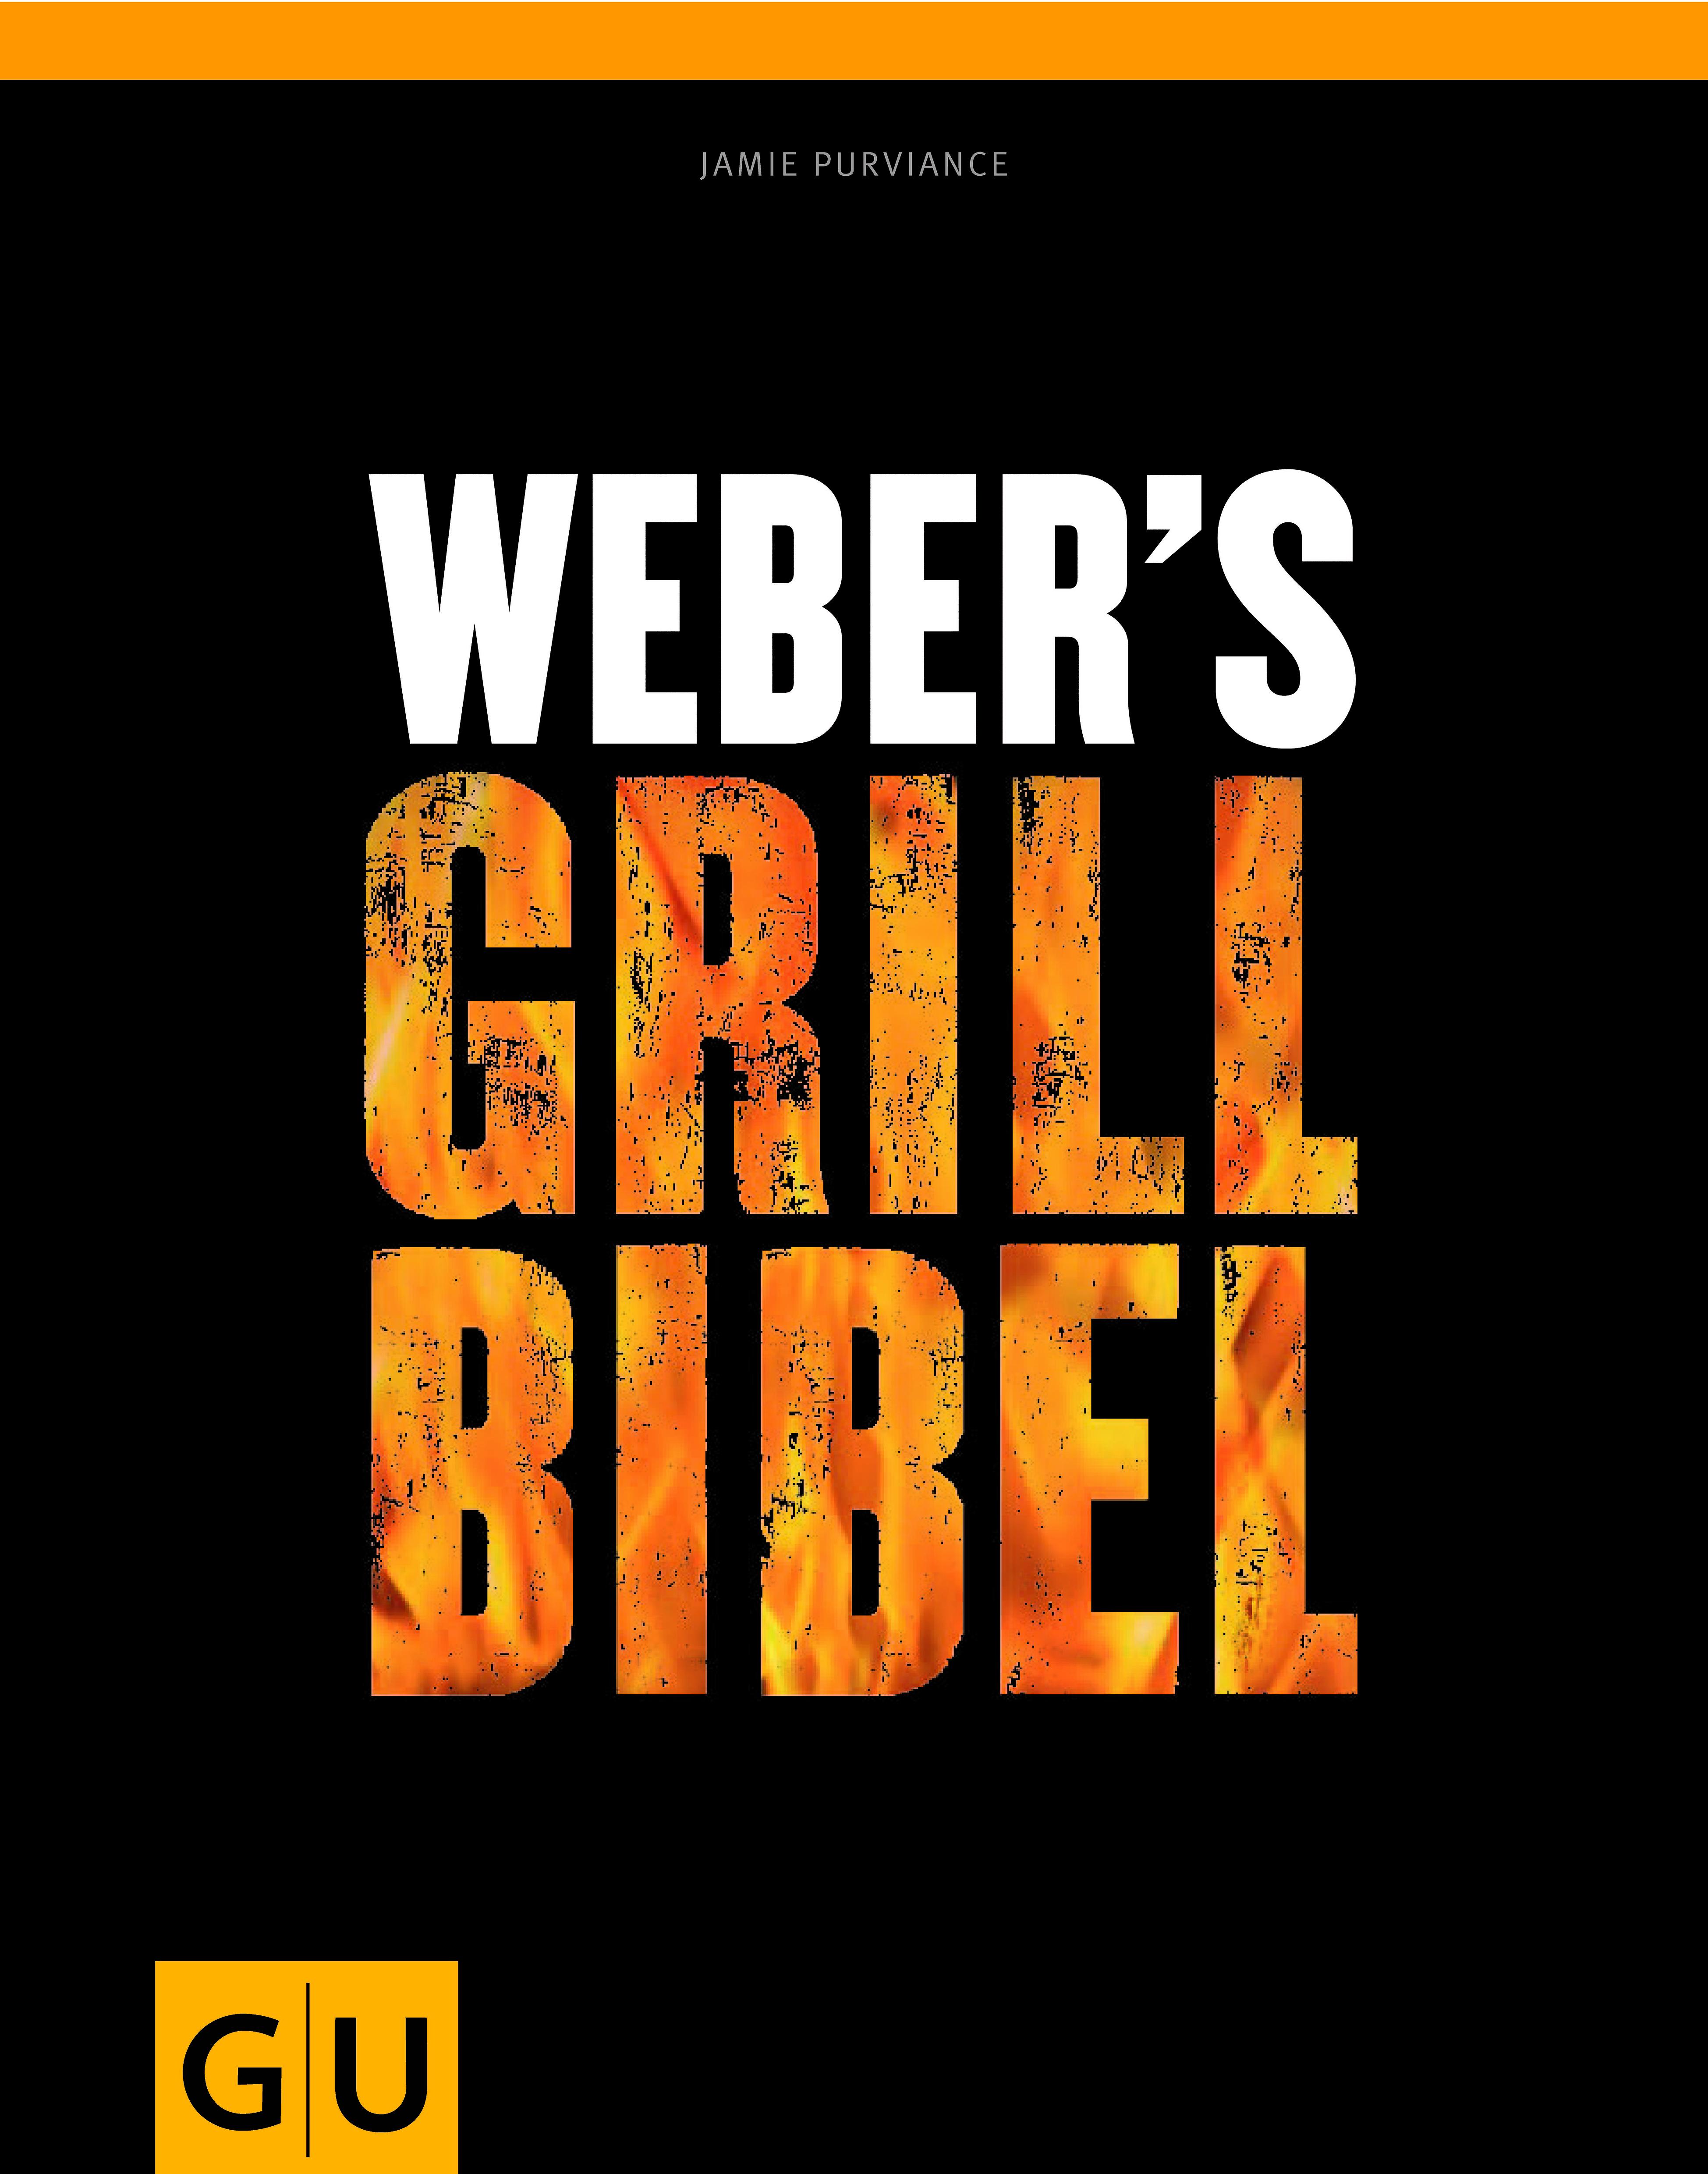 Weber’s Grill Bibel